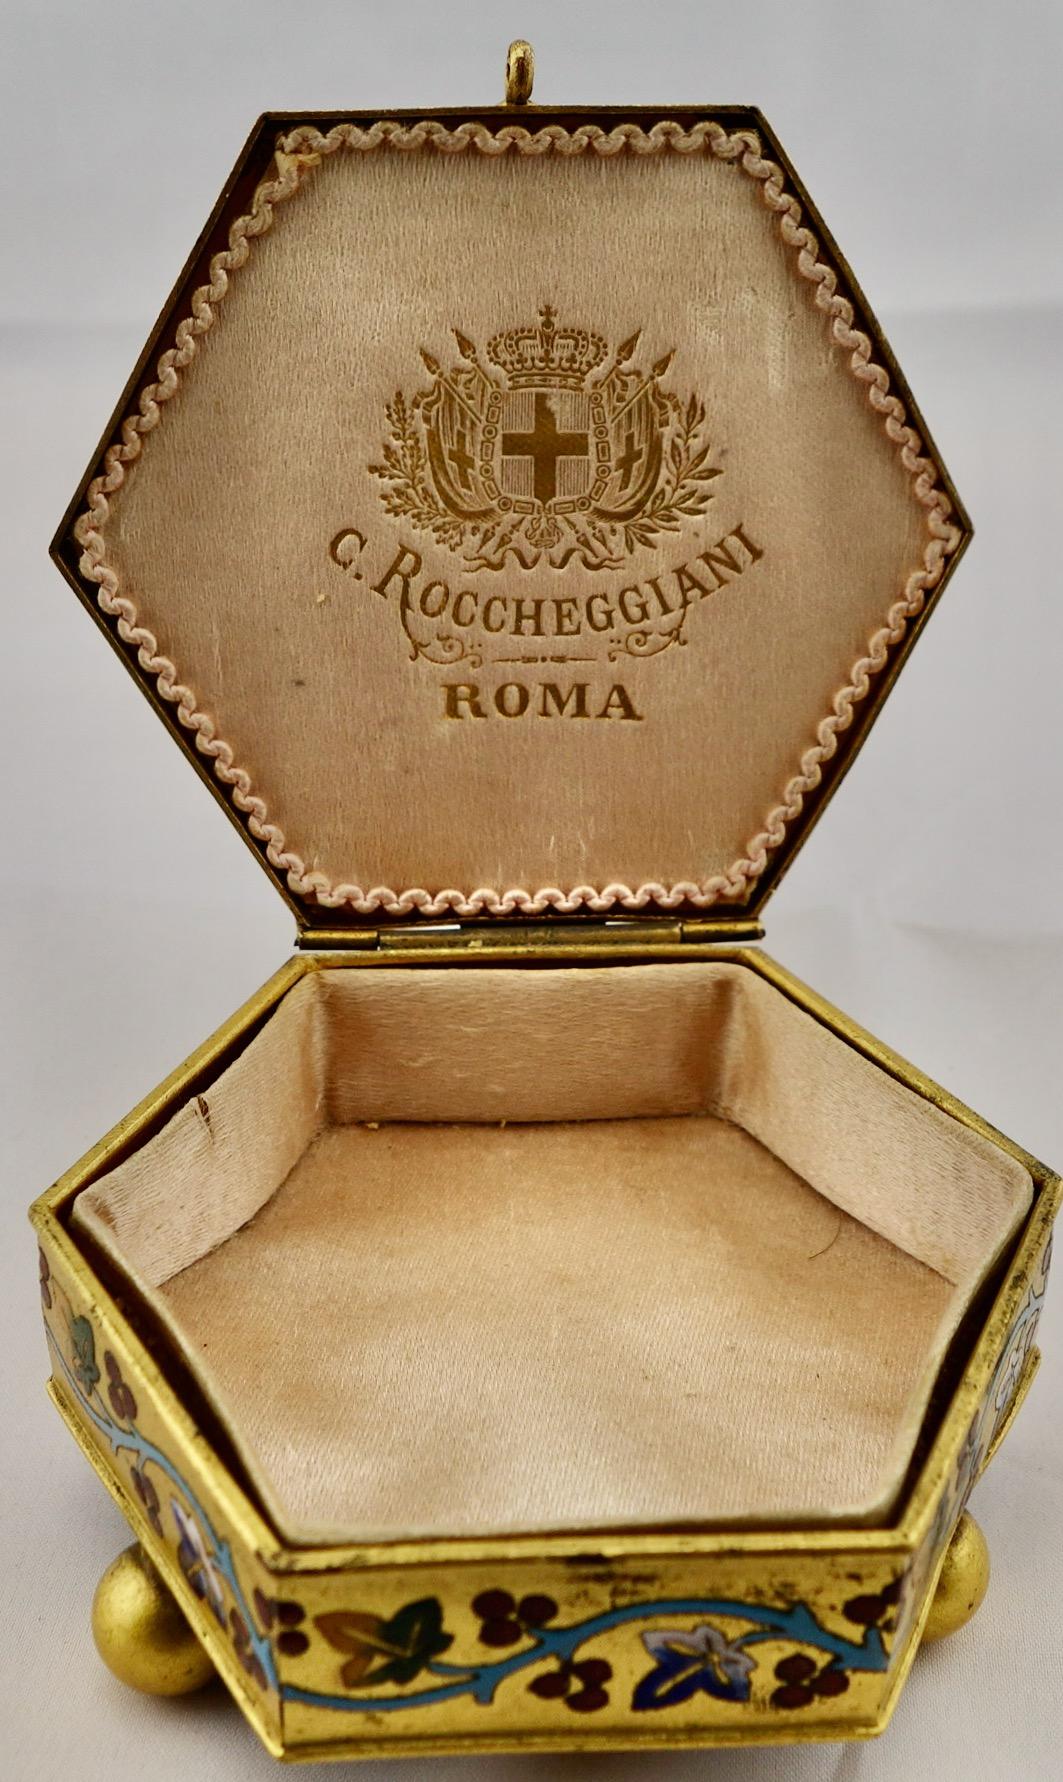 Mosaic Italian Micromosaic Hexagonal Box by Roccheggiani Workshop, Rome, 1880s